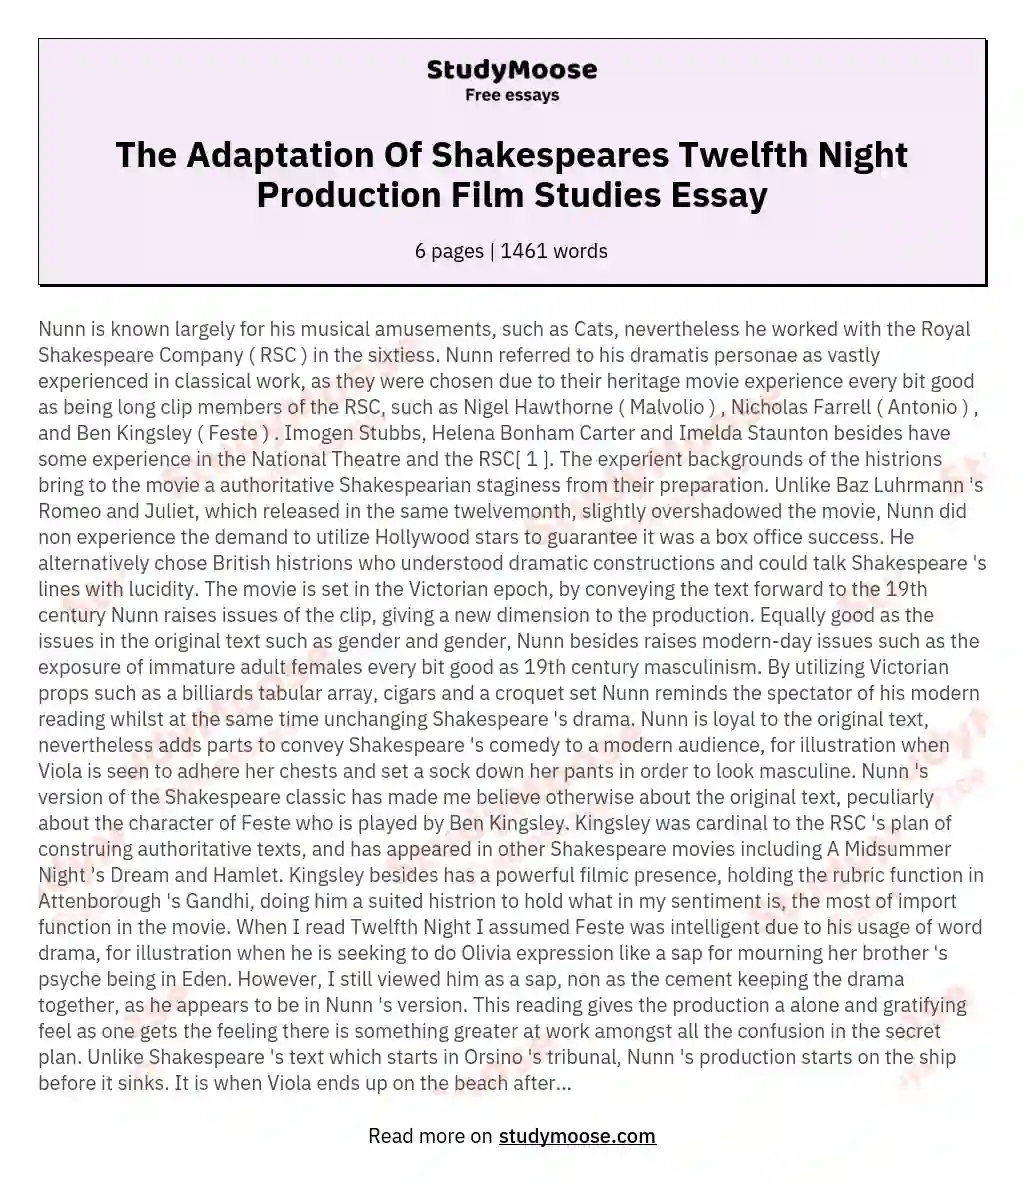 The Adaptation Of Shakespeares Twelfth Night Production Film Studies Essay